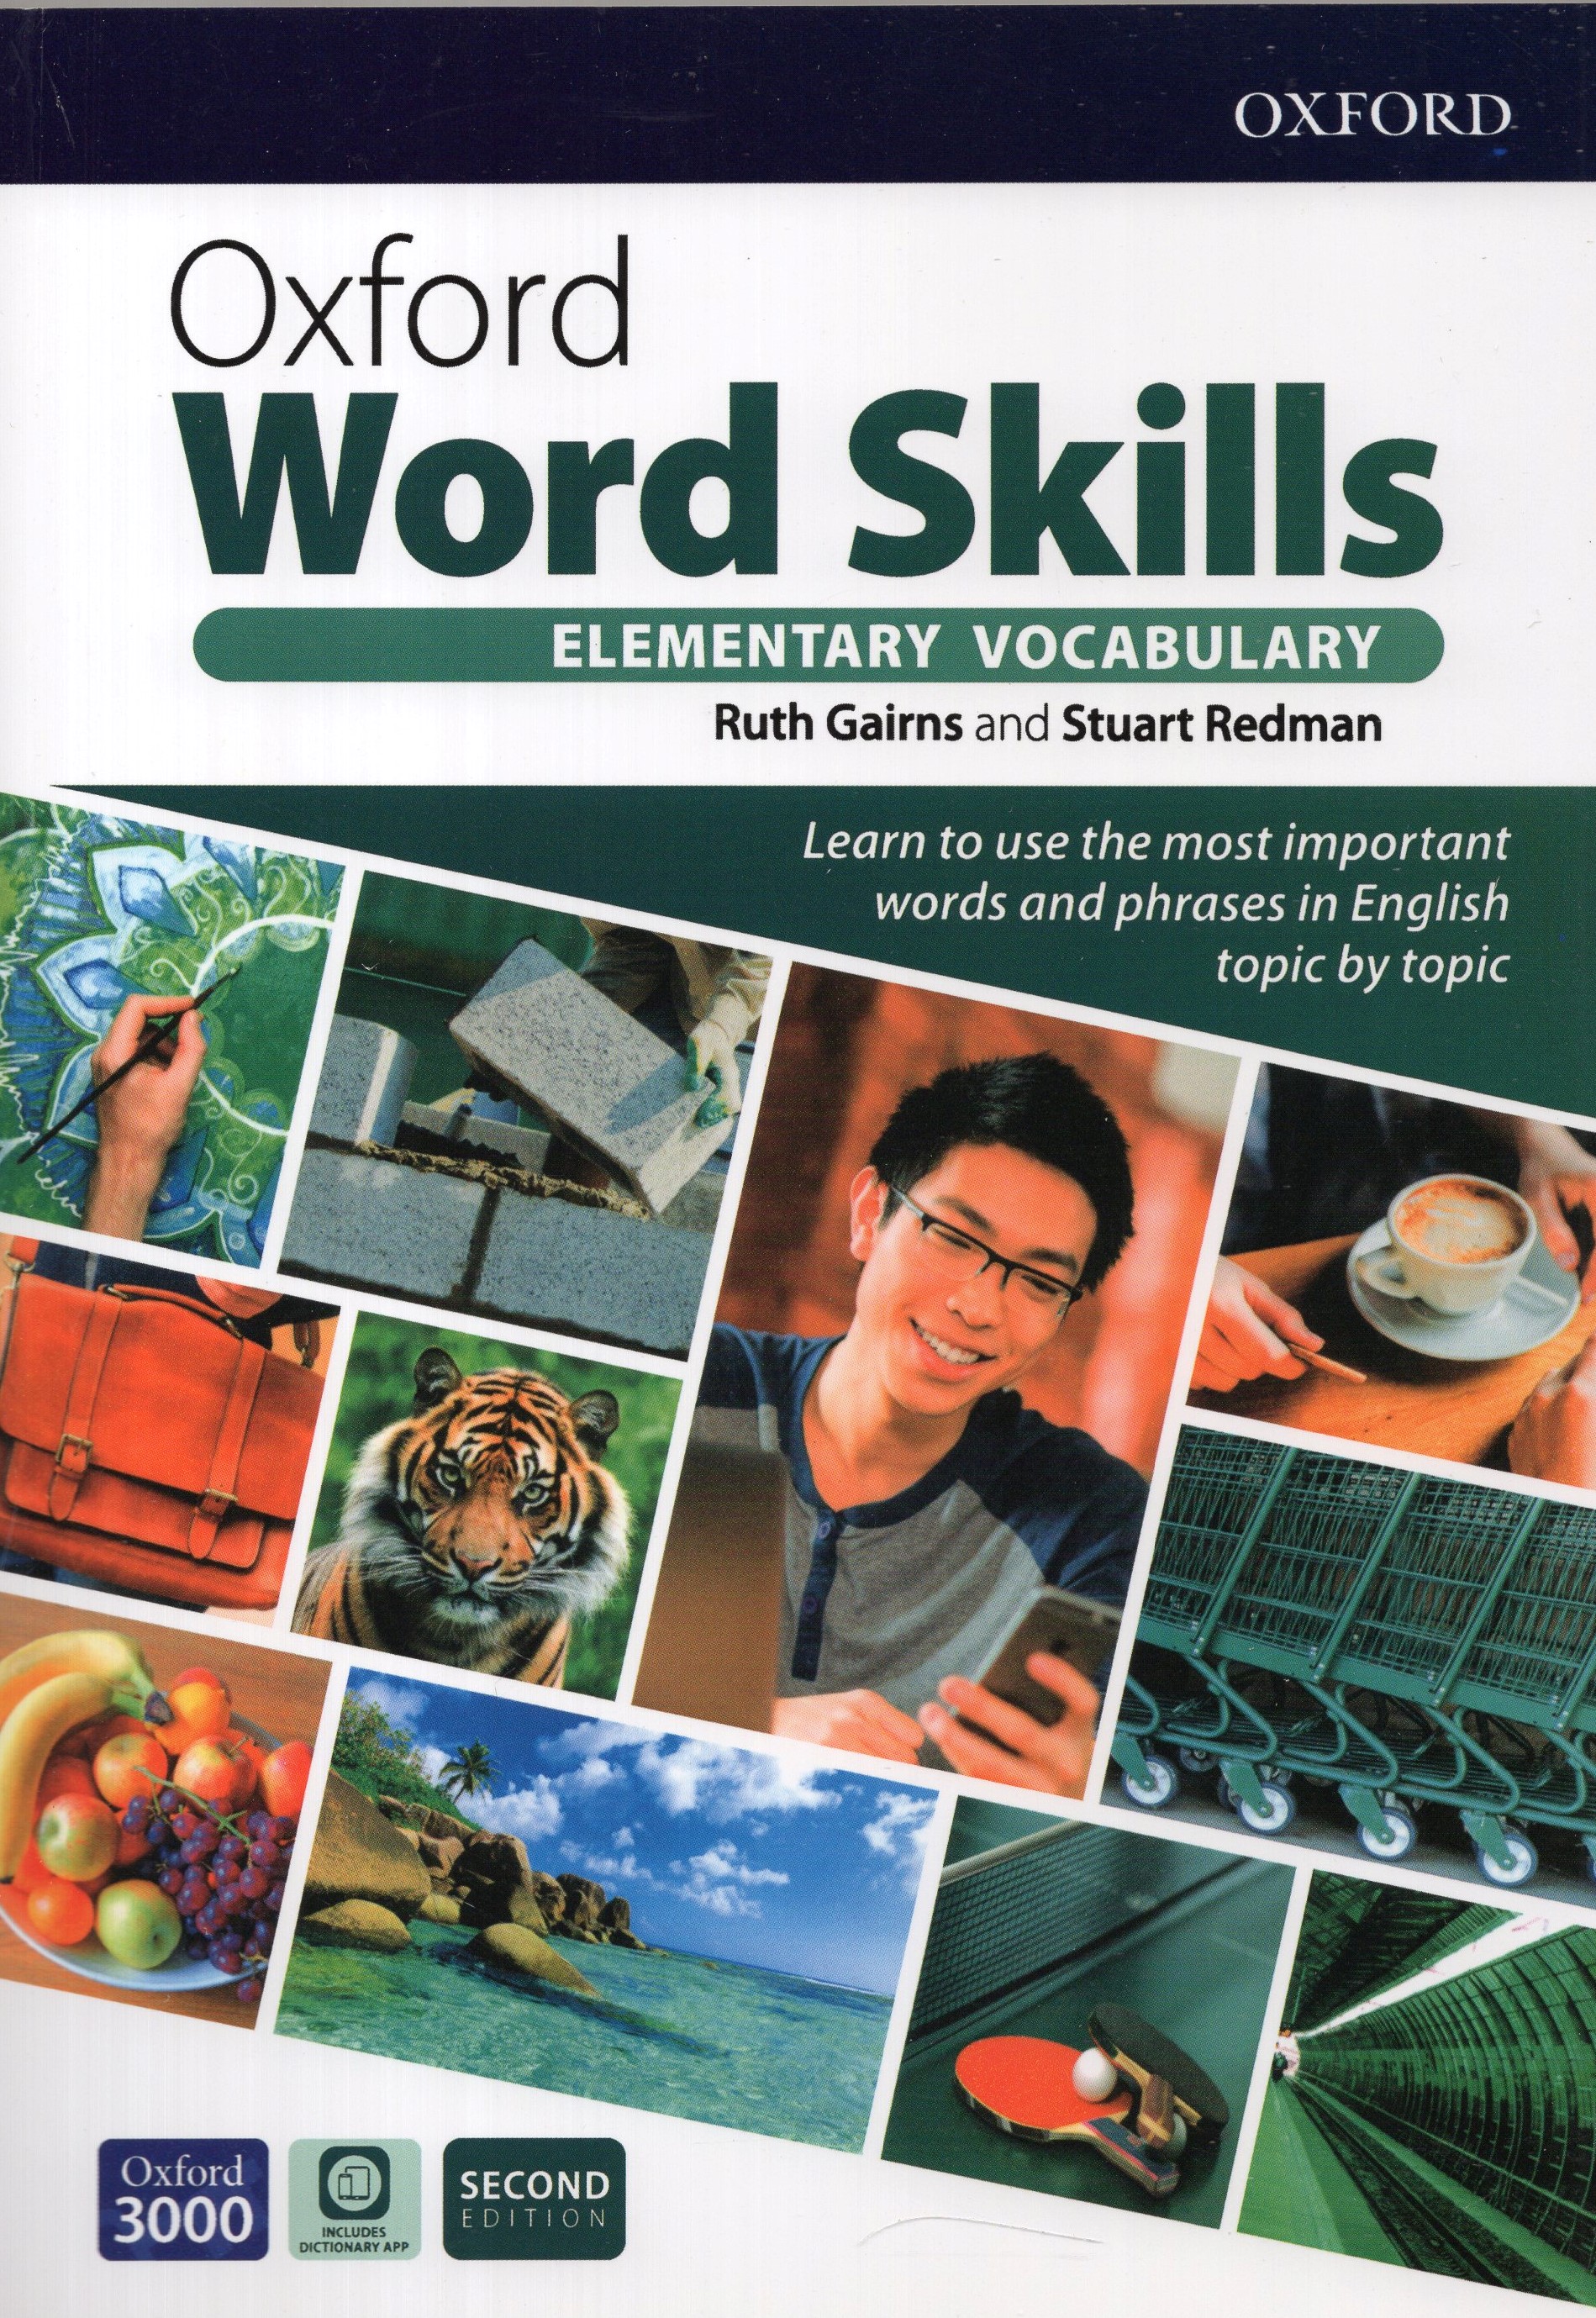 Oxford Word Skills Elementary Vocabulary(OXFORD)